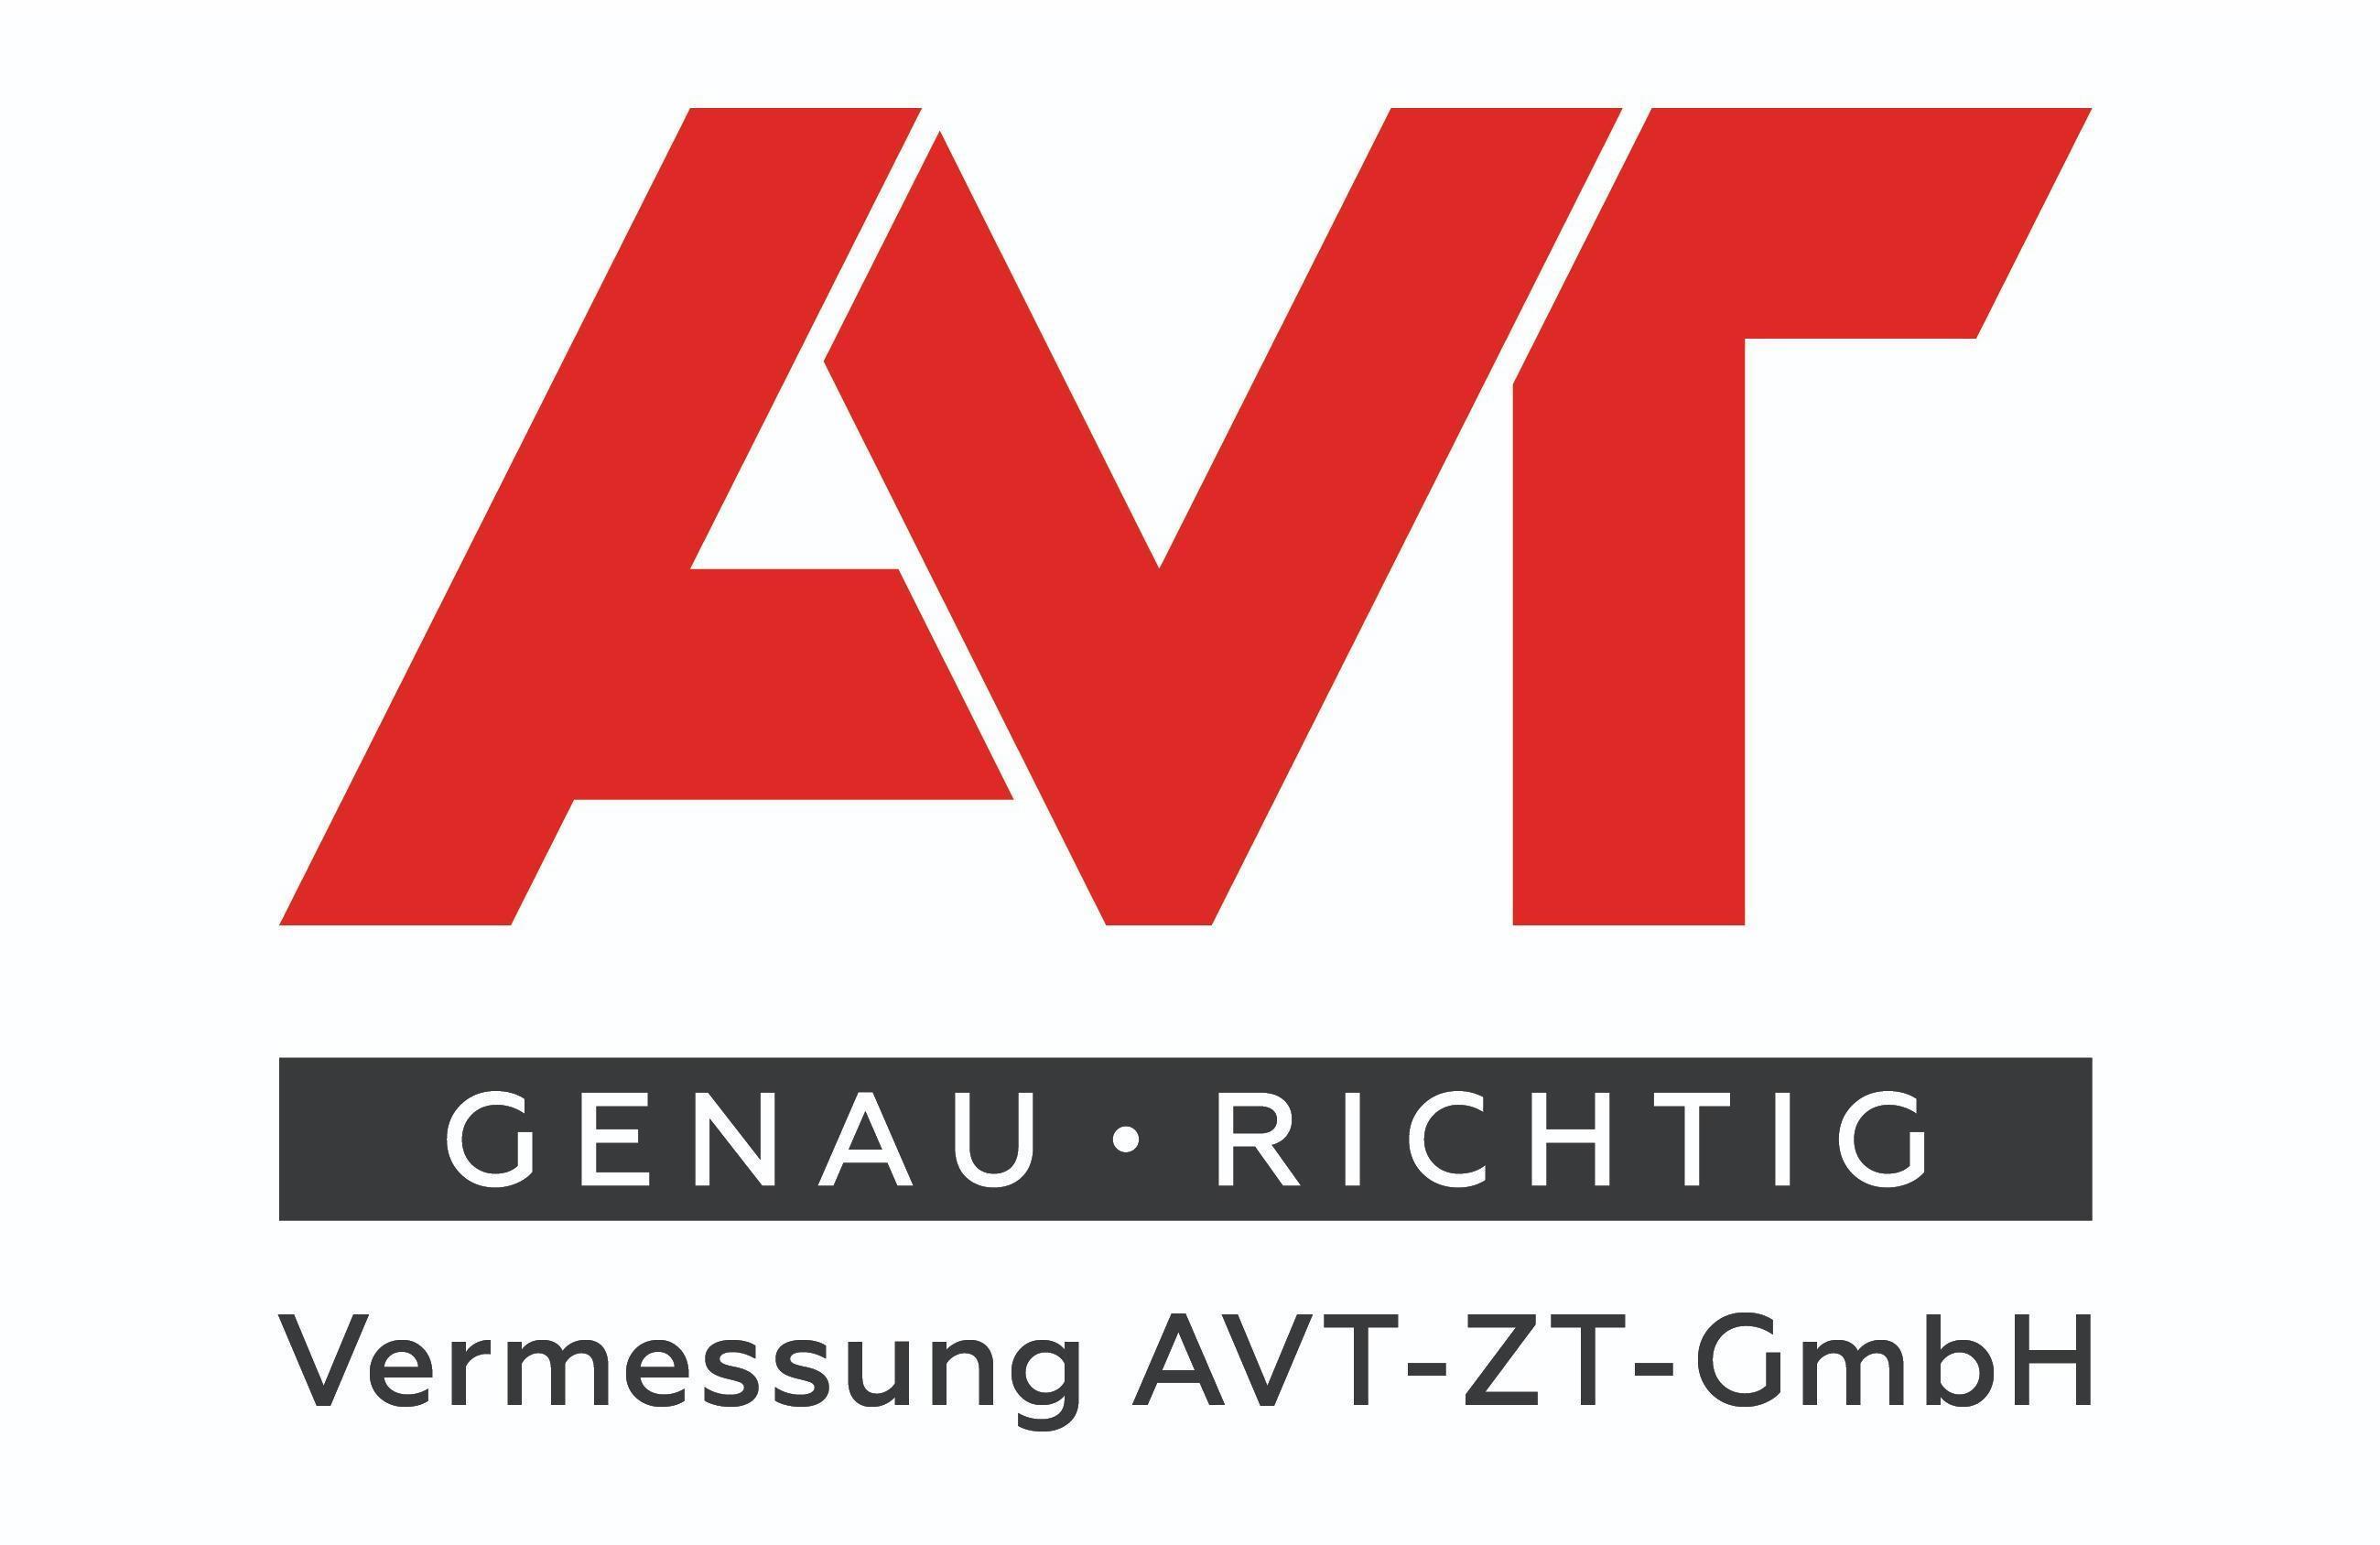 Logo Vermessung AVT-ZT-GmbH